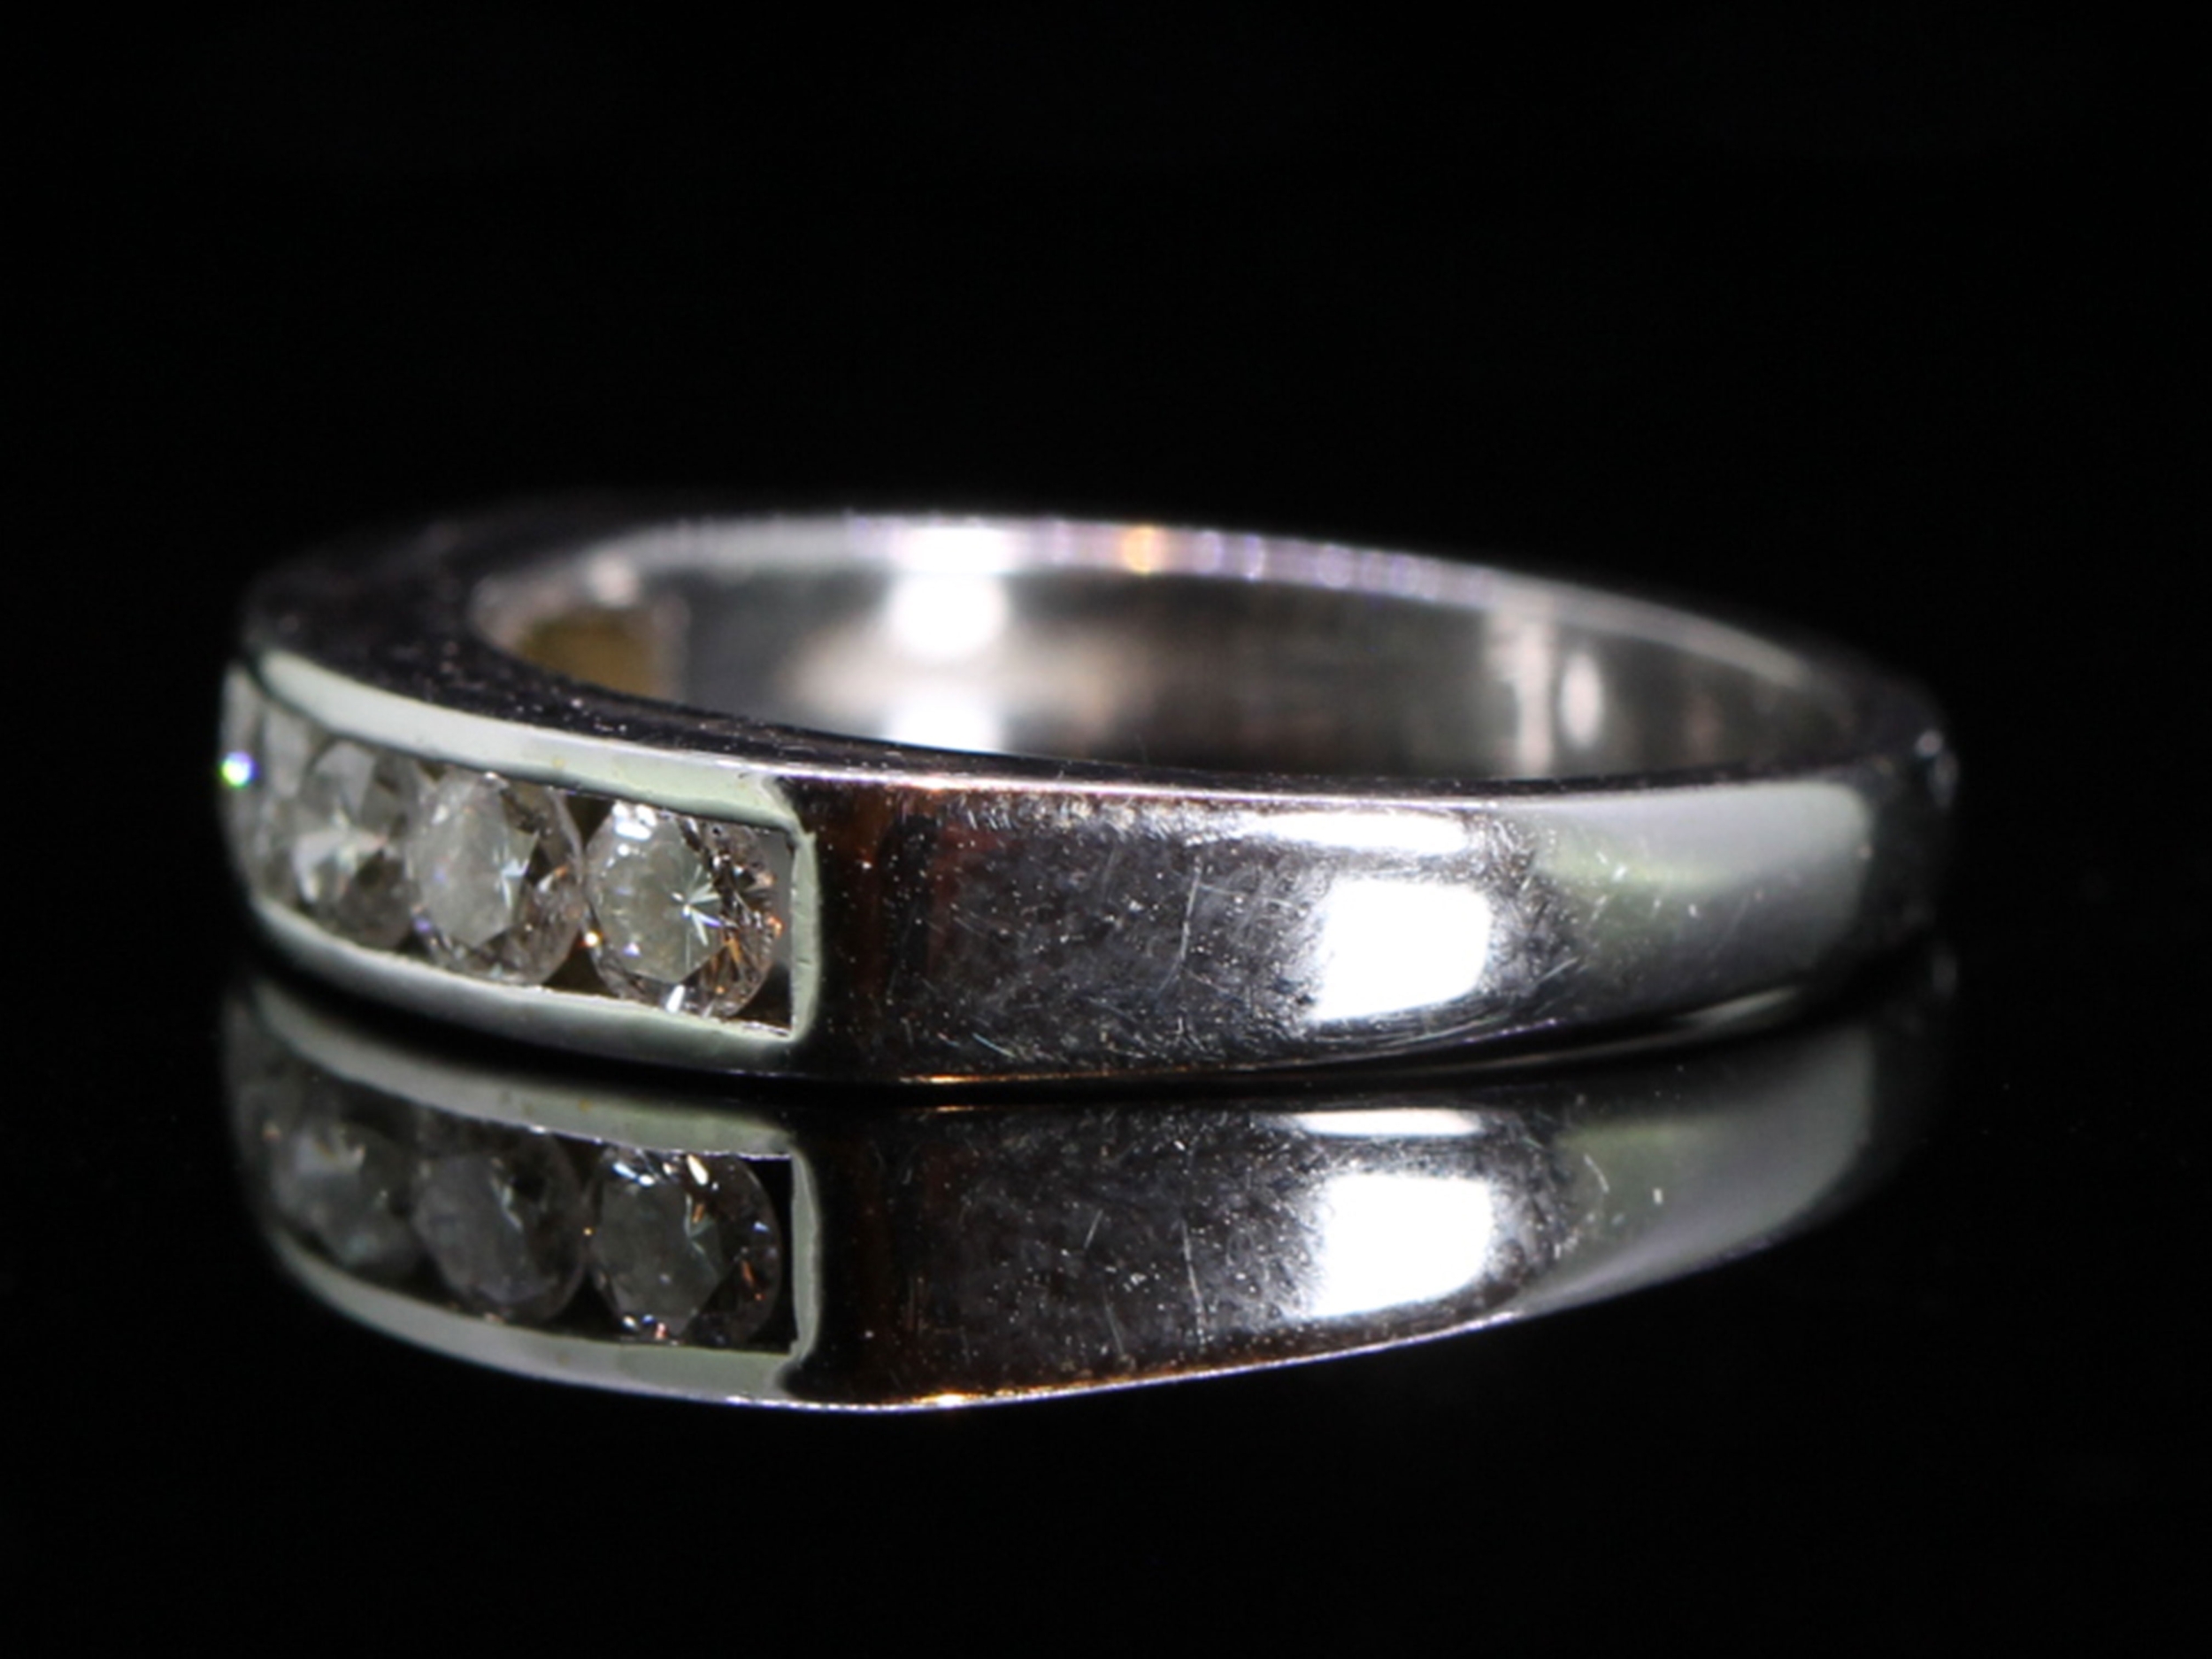 Stunning 18ct White Gold Diamond Eternity Ring